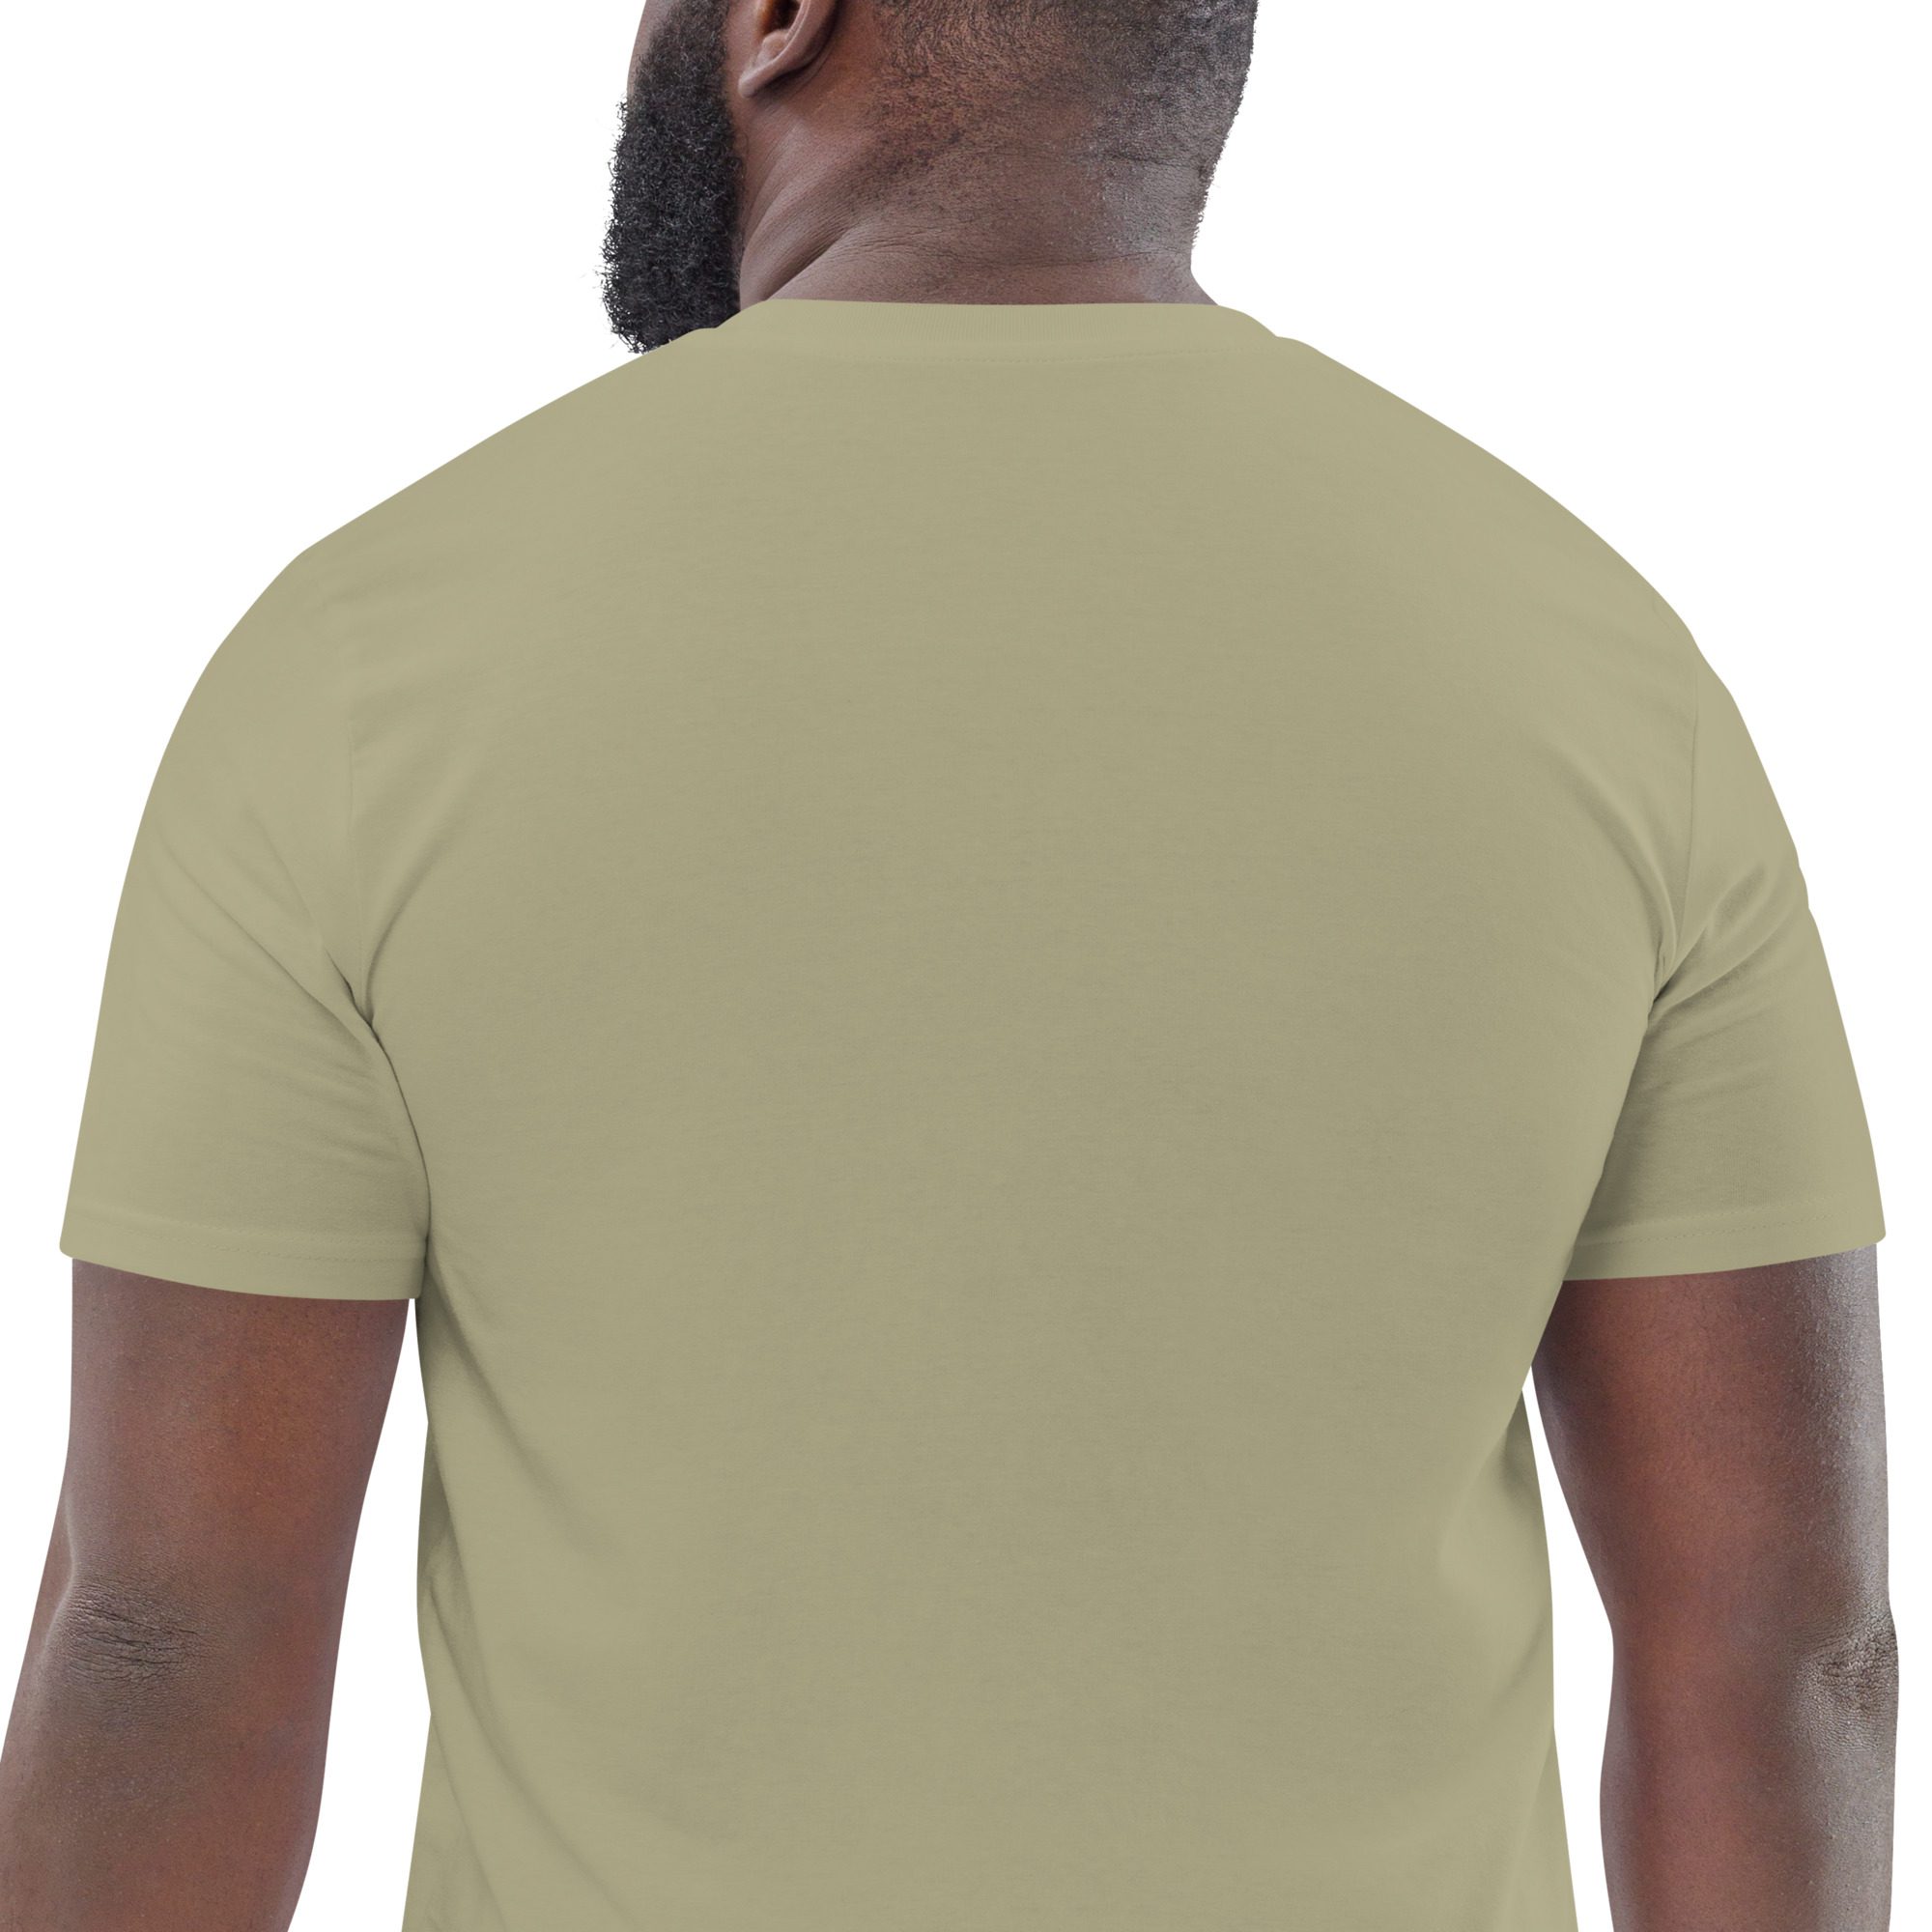 unisex organic cotton t shirt sage zoomed in 651ada939c657